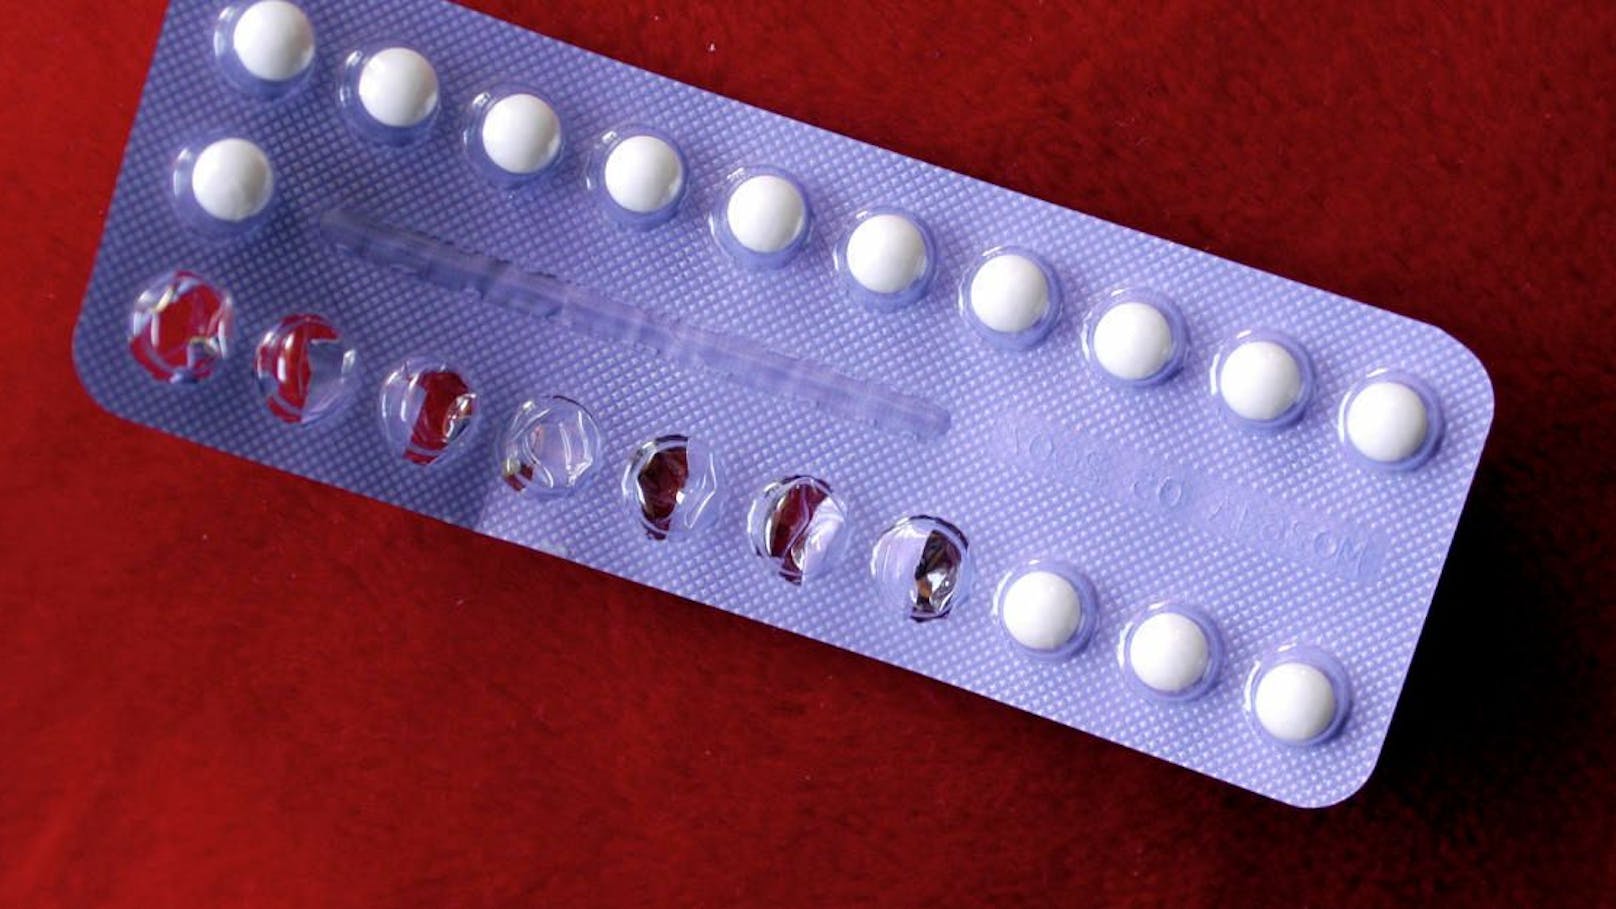 Gentest zeigt Thrombose-Risiko durch Anti-Baby-Pille